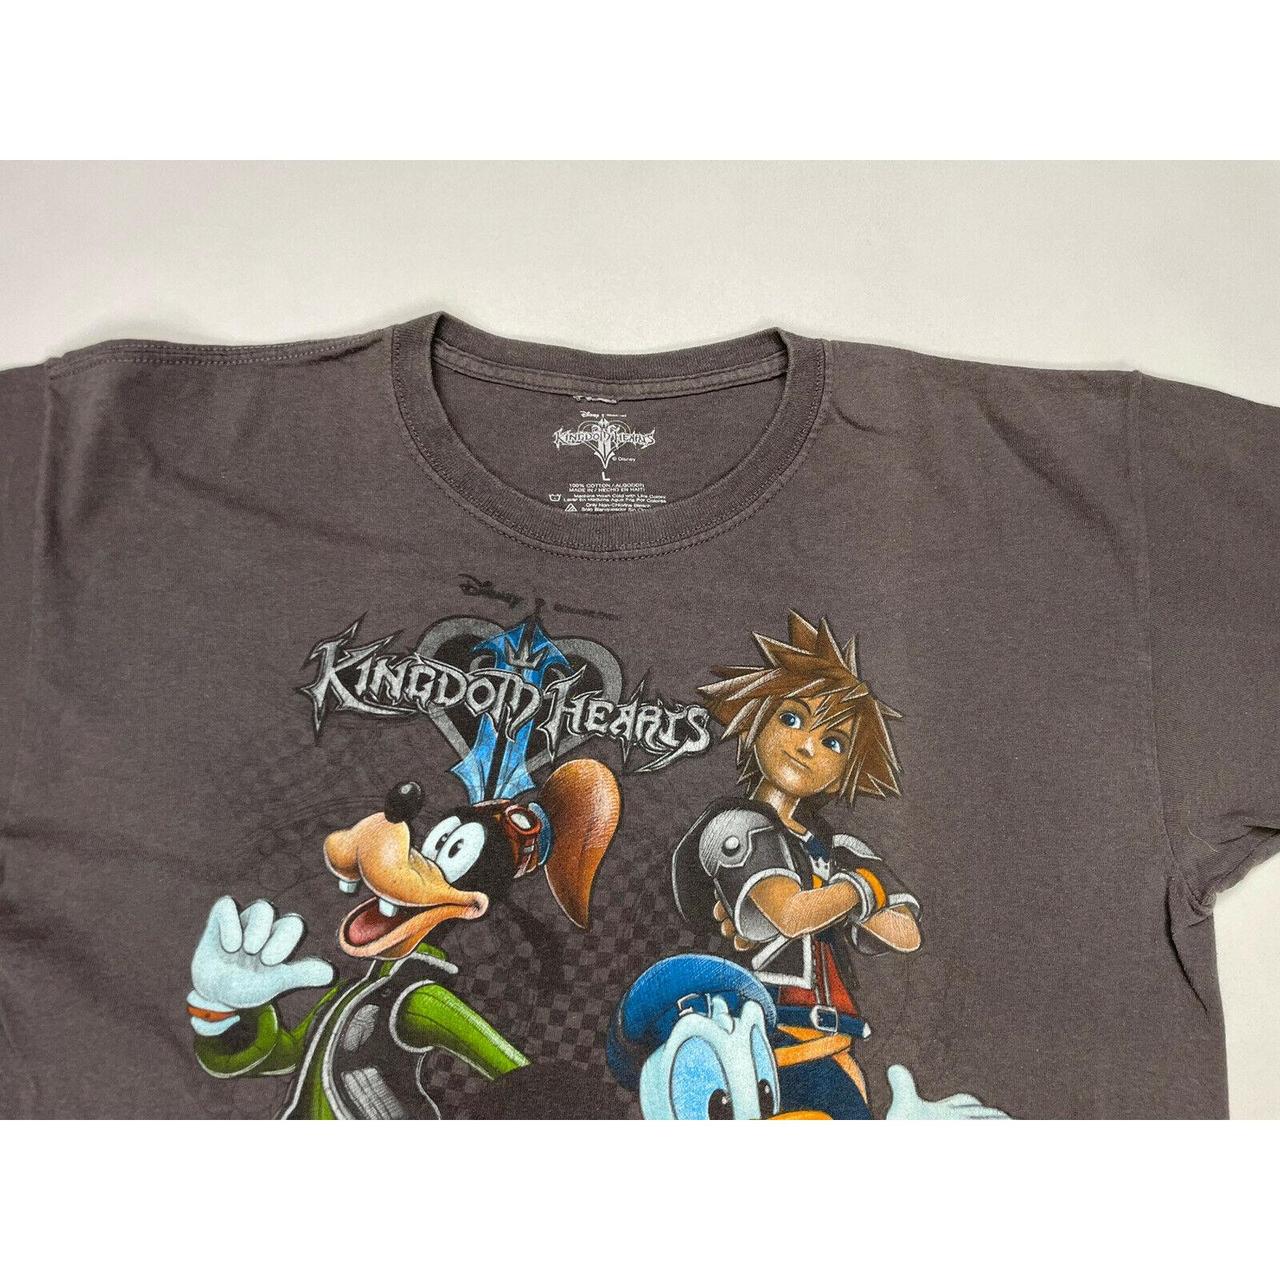 Product Image 3 - Disney Kingdom Hearts Graphic T-shirt